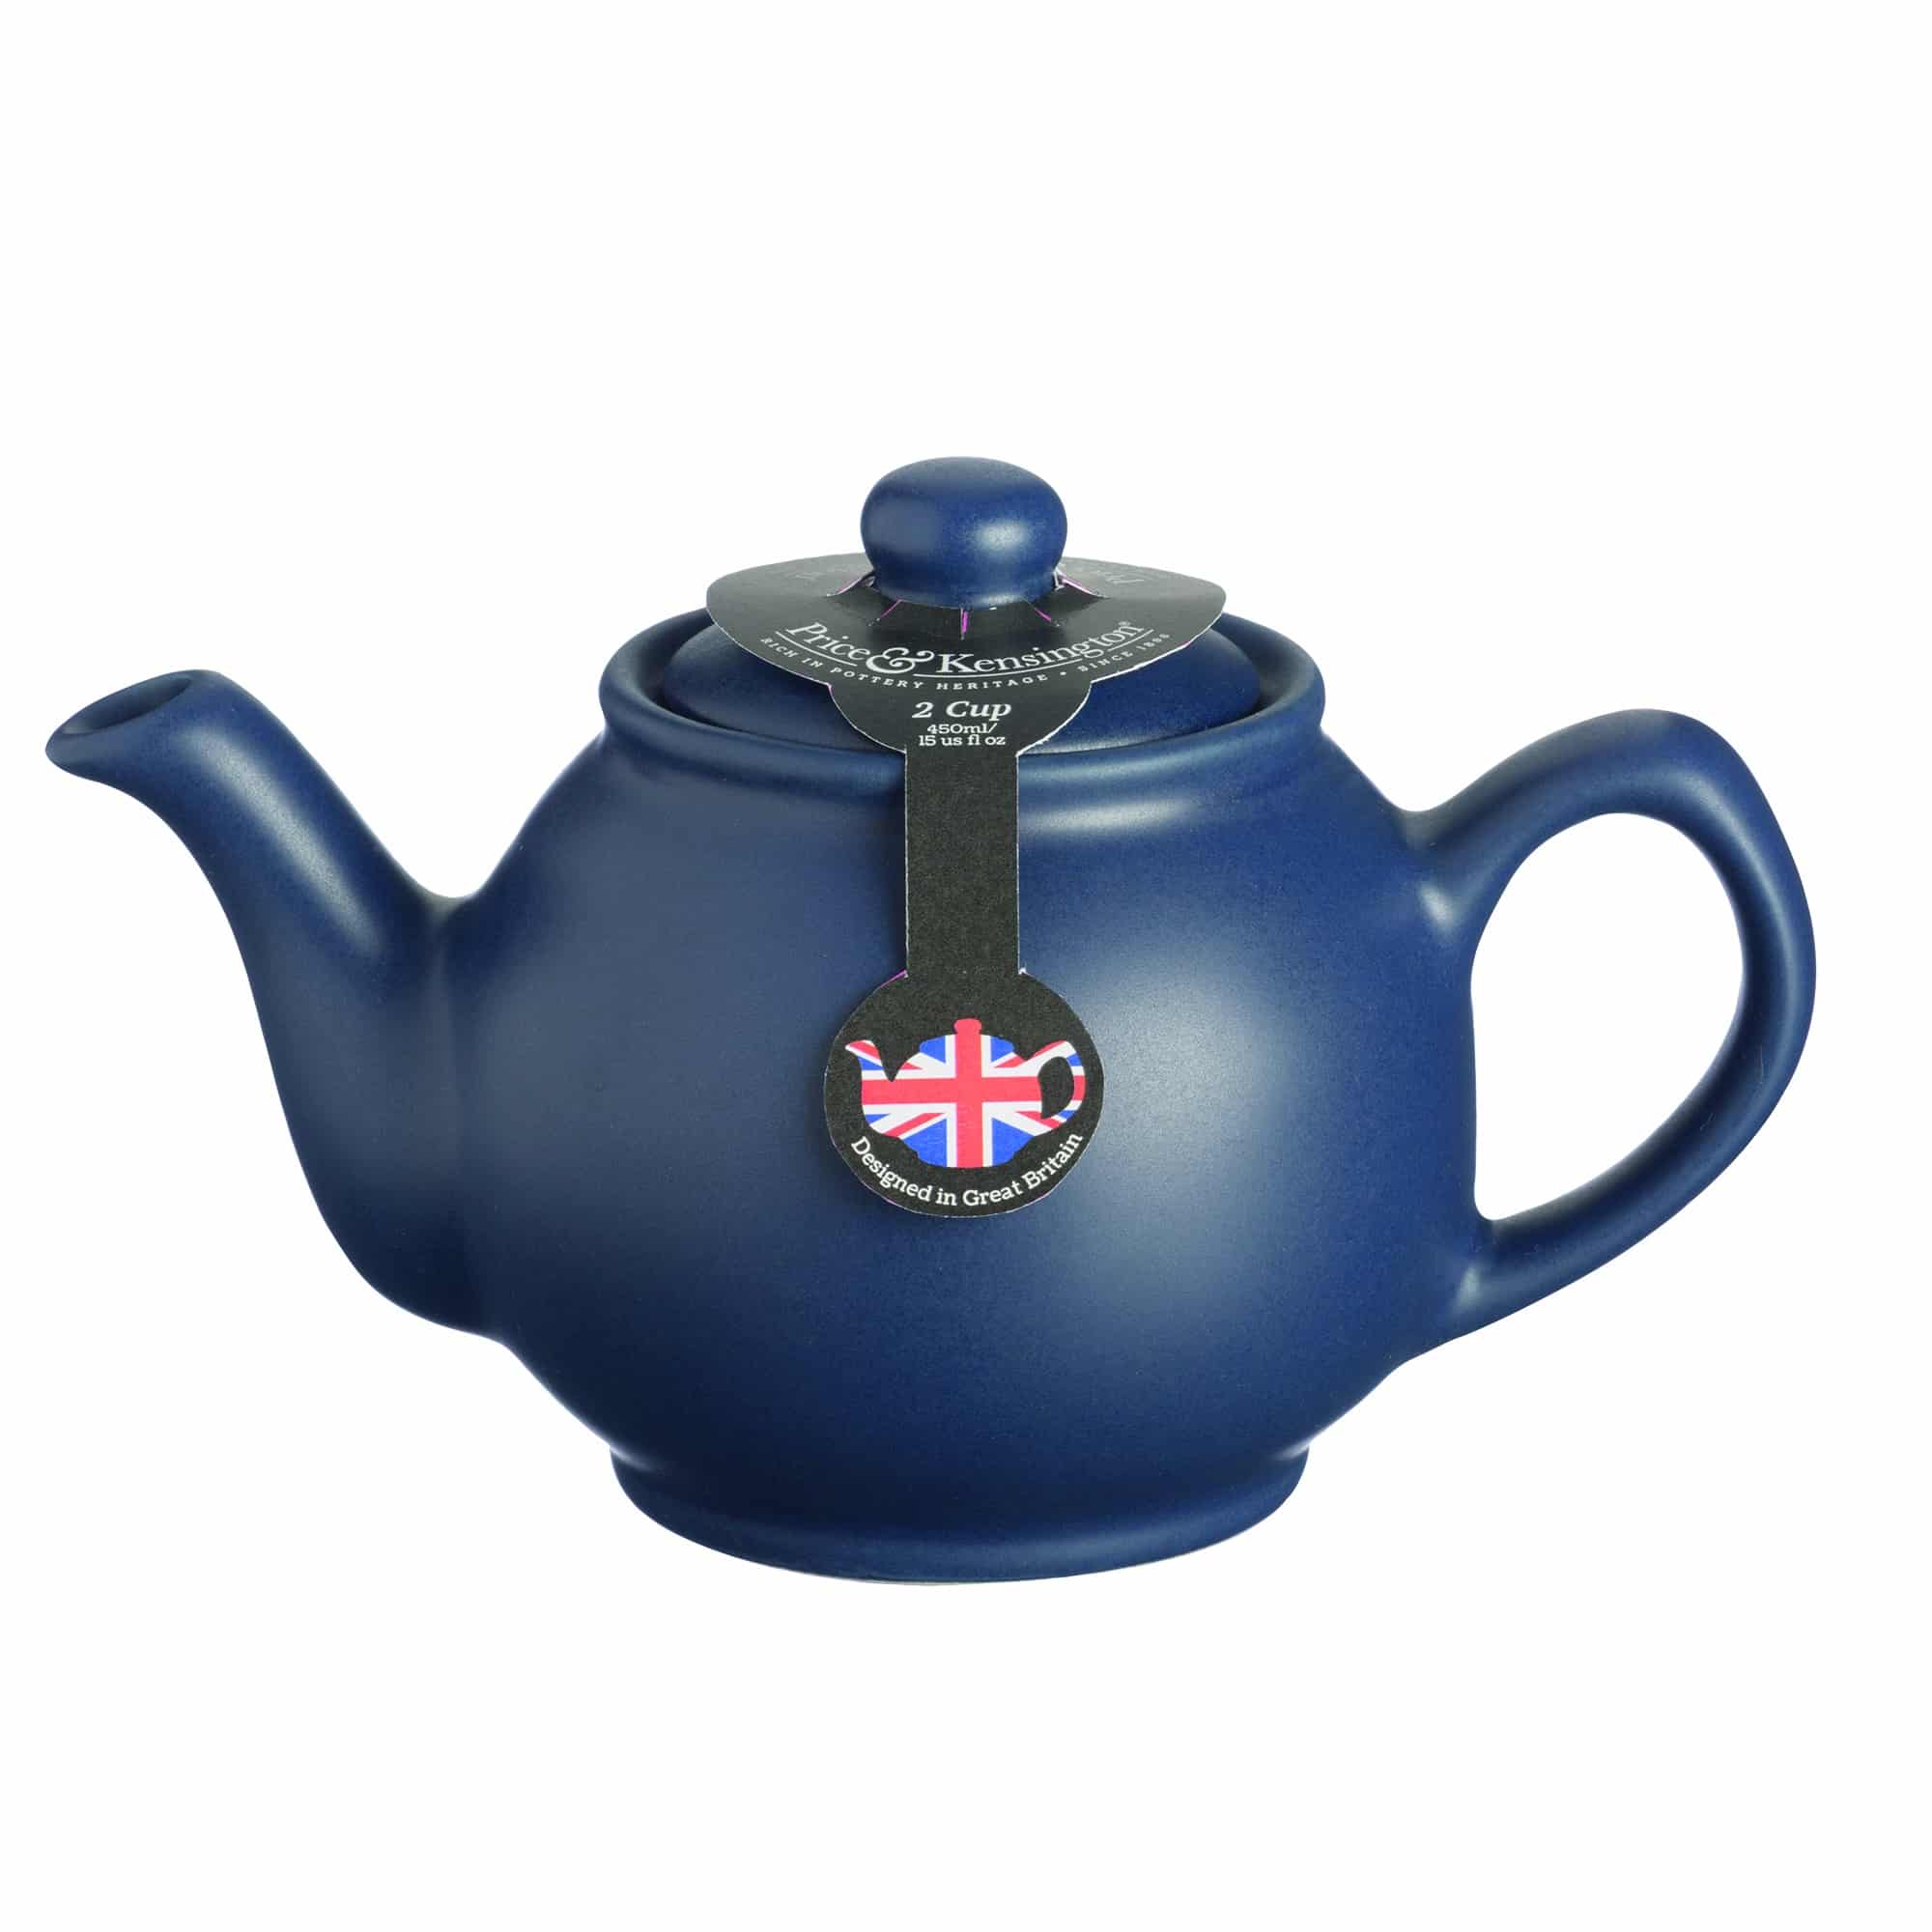 Price & Kensington Teapot 2 Cup Navy Blue